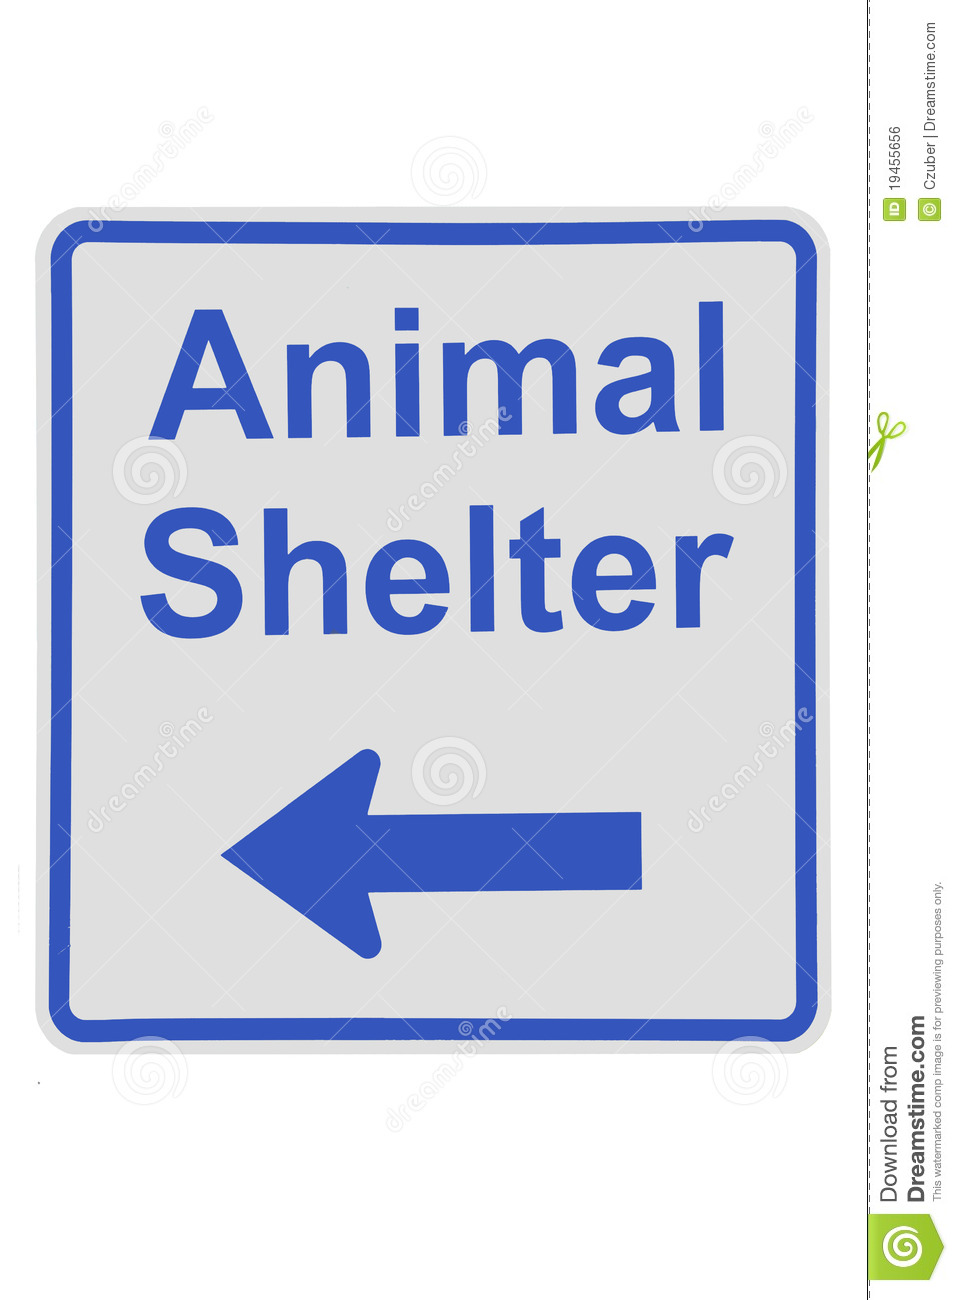 Animal Shelter Sign Royalty Free Stock Image   Image  19455656